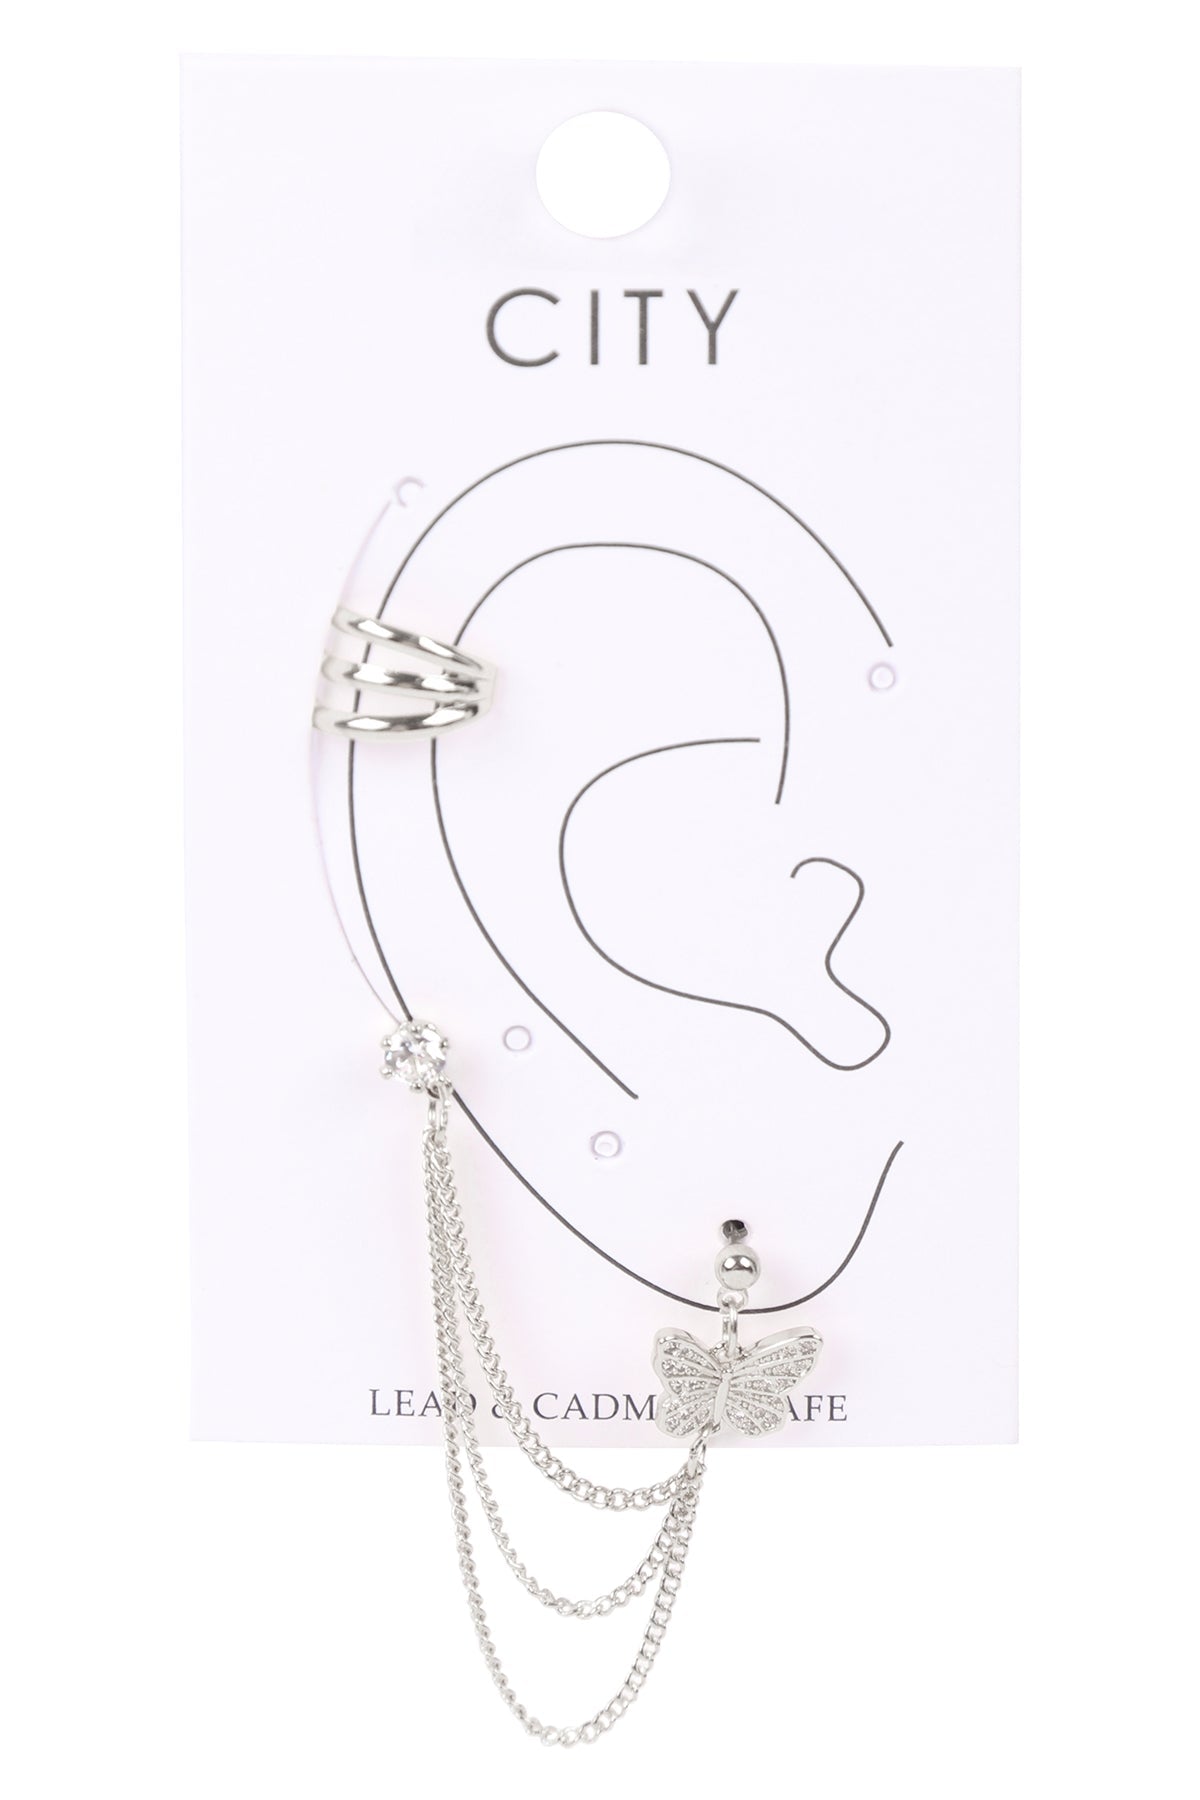 EAR CUFF MULTI CHAIN CUBIC CHAIN BUTTERFLY EARRINGS (NOW $1.00 ONLY!)